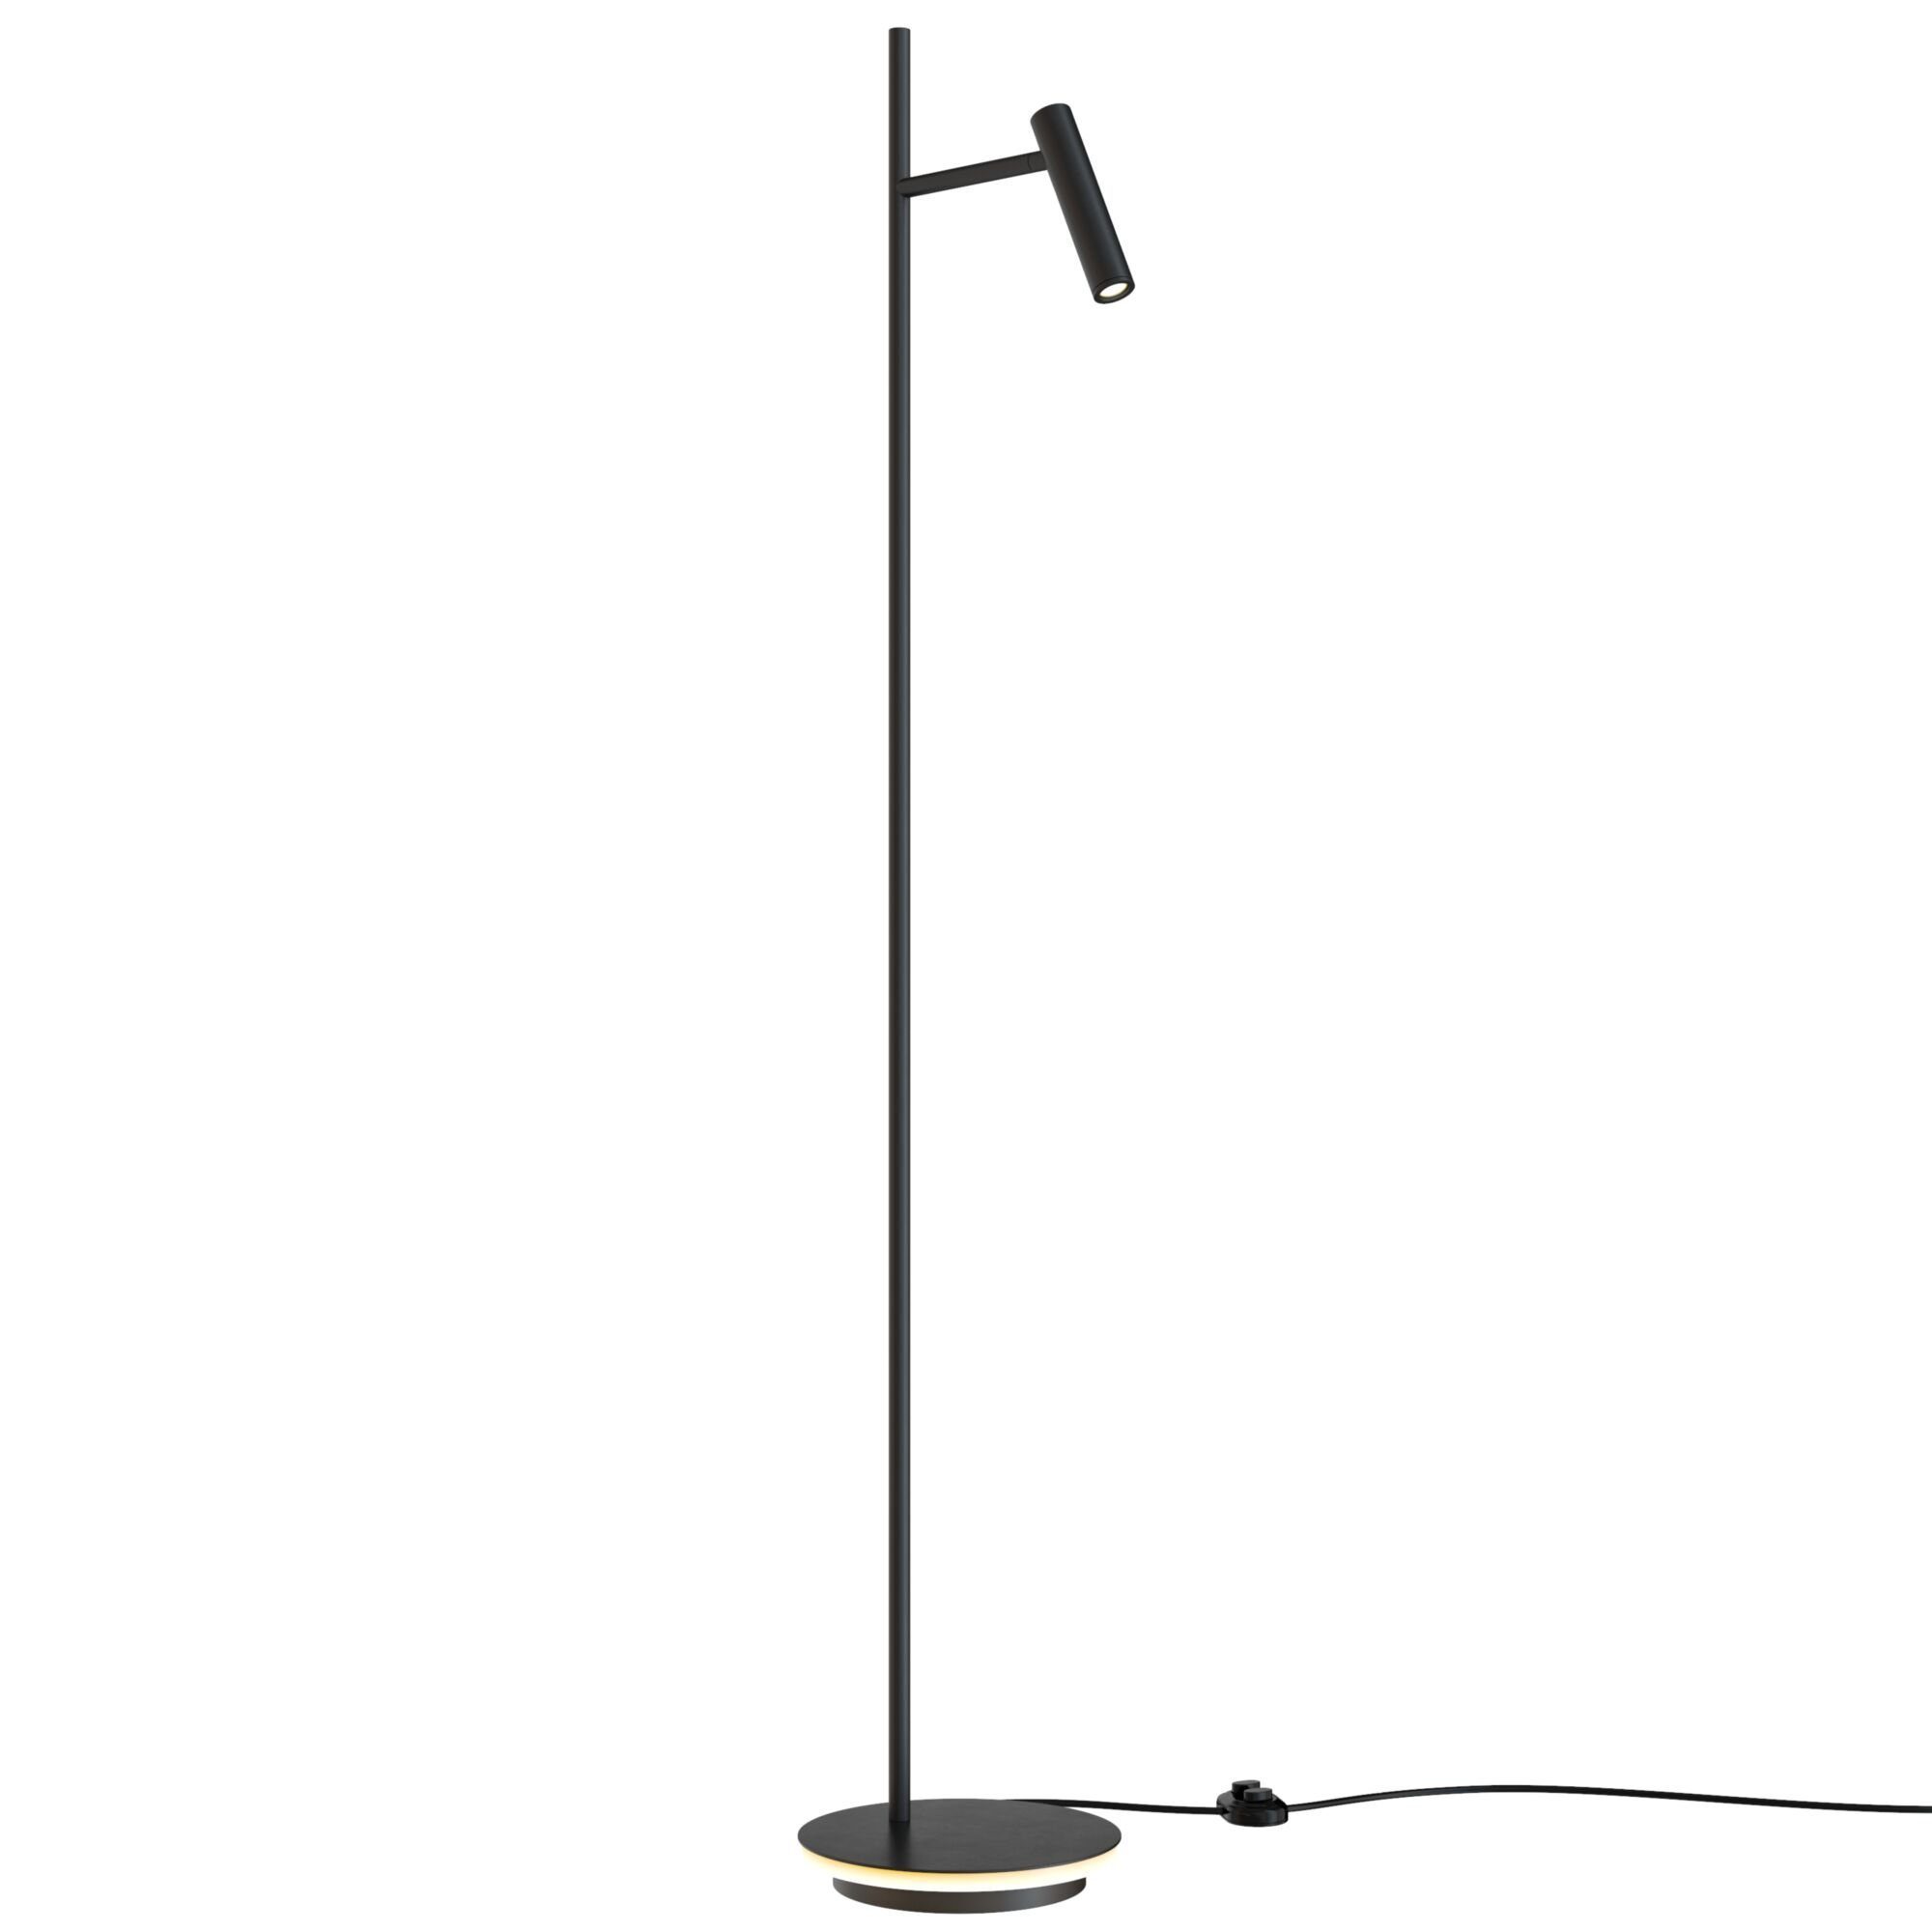 MAYTONI DECORATIVE LIGHTING Stehlampe Estudo 30.5x138.7x24 cm, LED fest integriert, hochwertige Design Lampe & dekoratives Raumobjekt